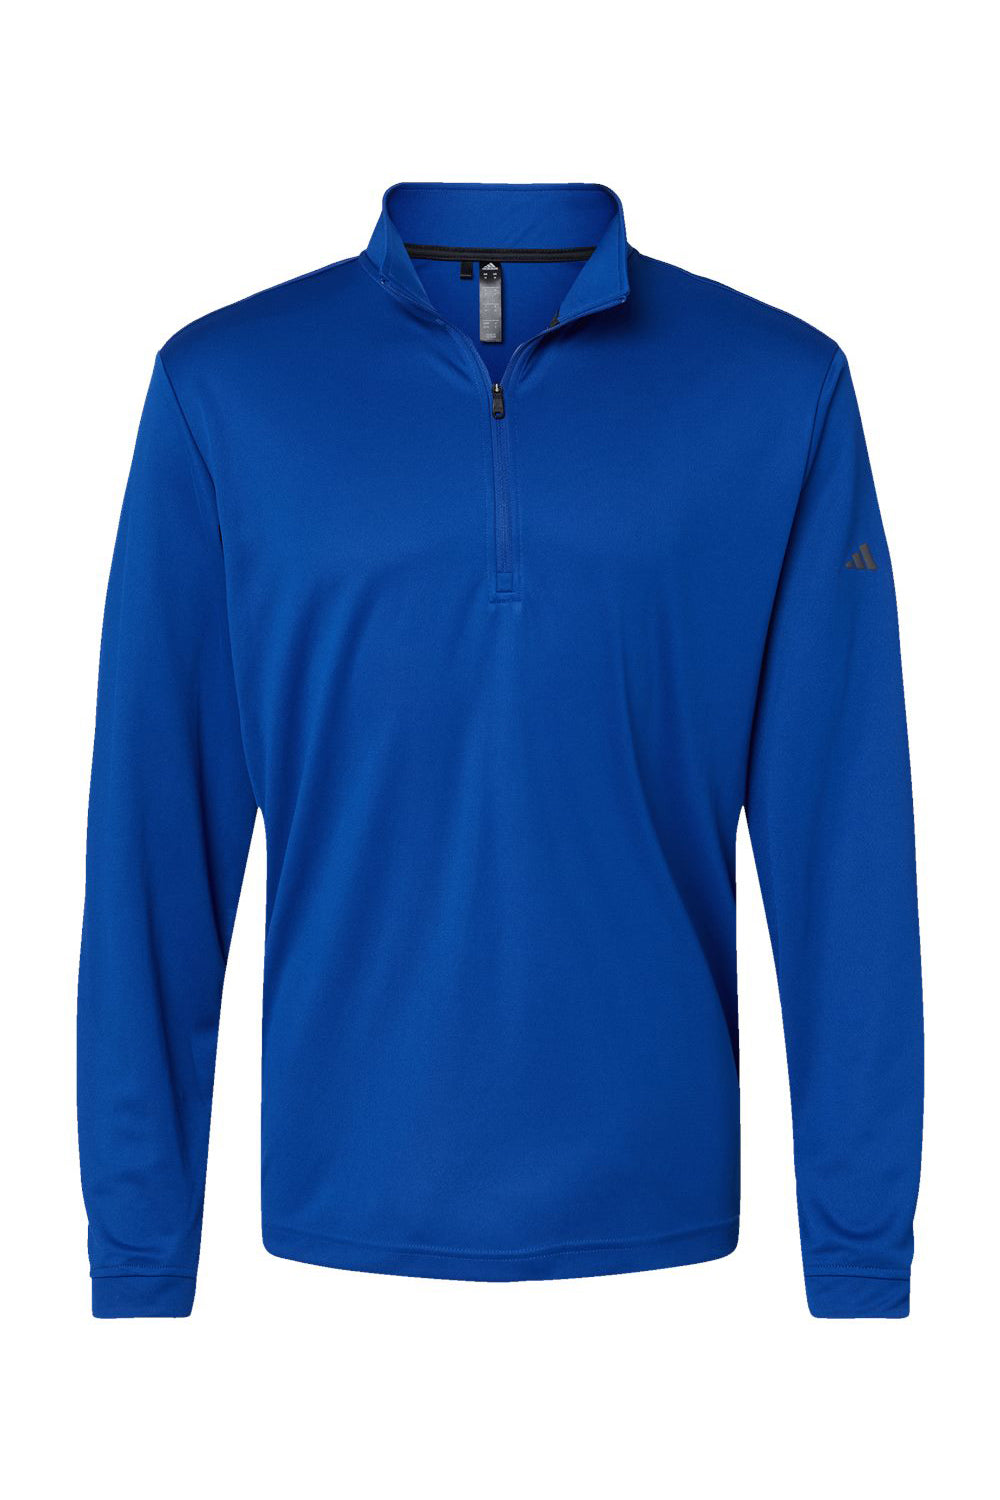 Adidas A401 Mens UPF 50+ 1/4 Zip Sweatshirt Collegiate Royal Blue Flat Front